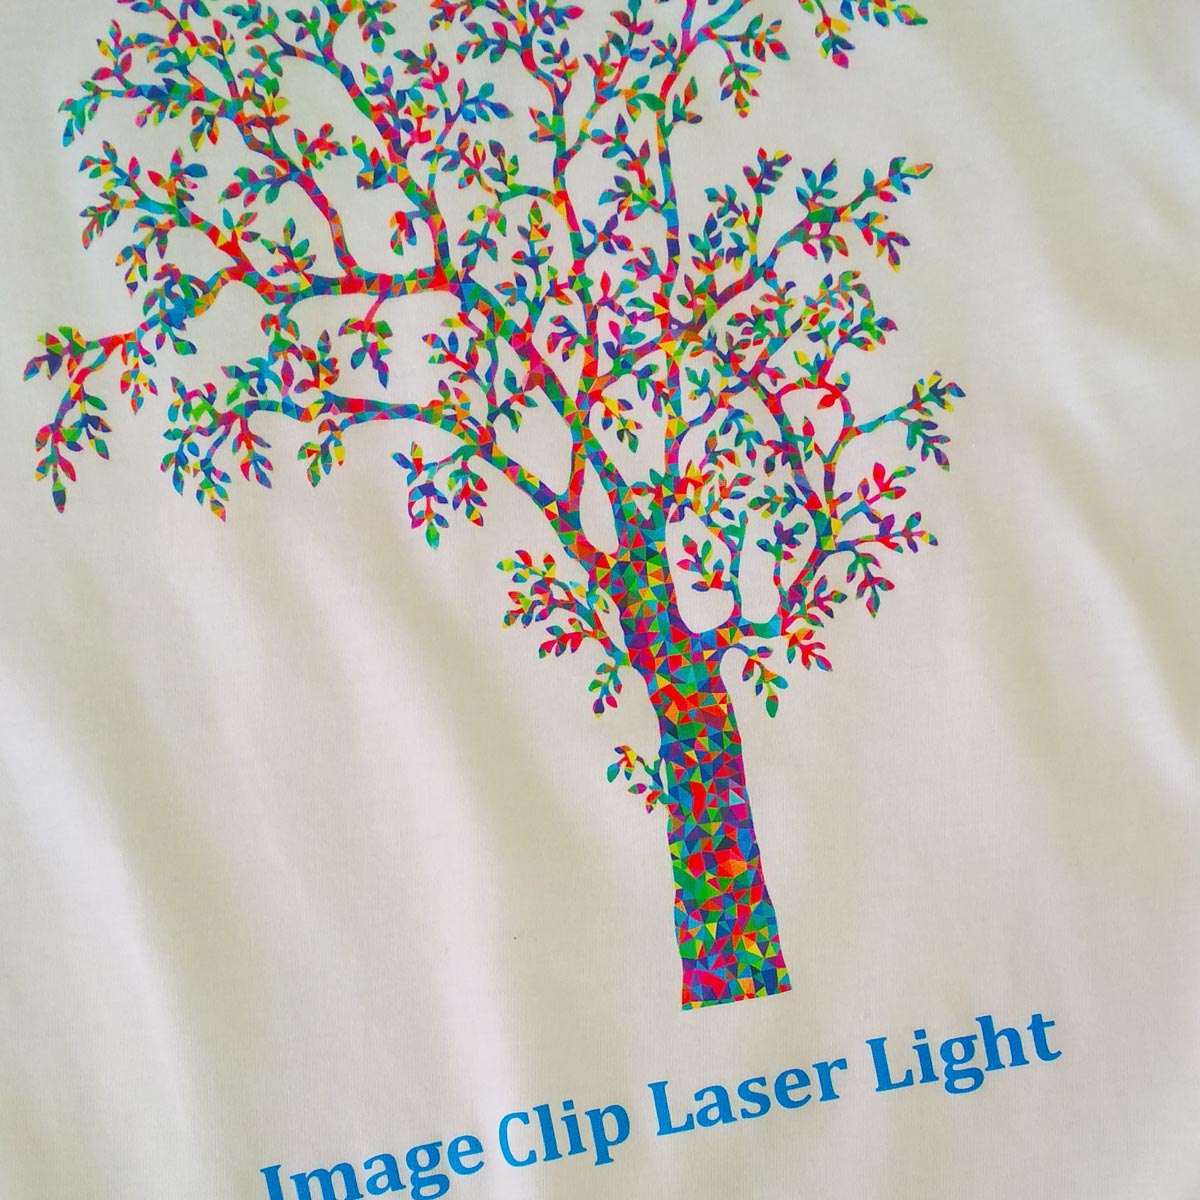 Image Clip Laser Light without background - Transfer paper for light textiles for laser printers - 10 sets